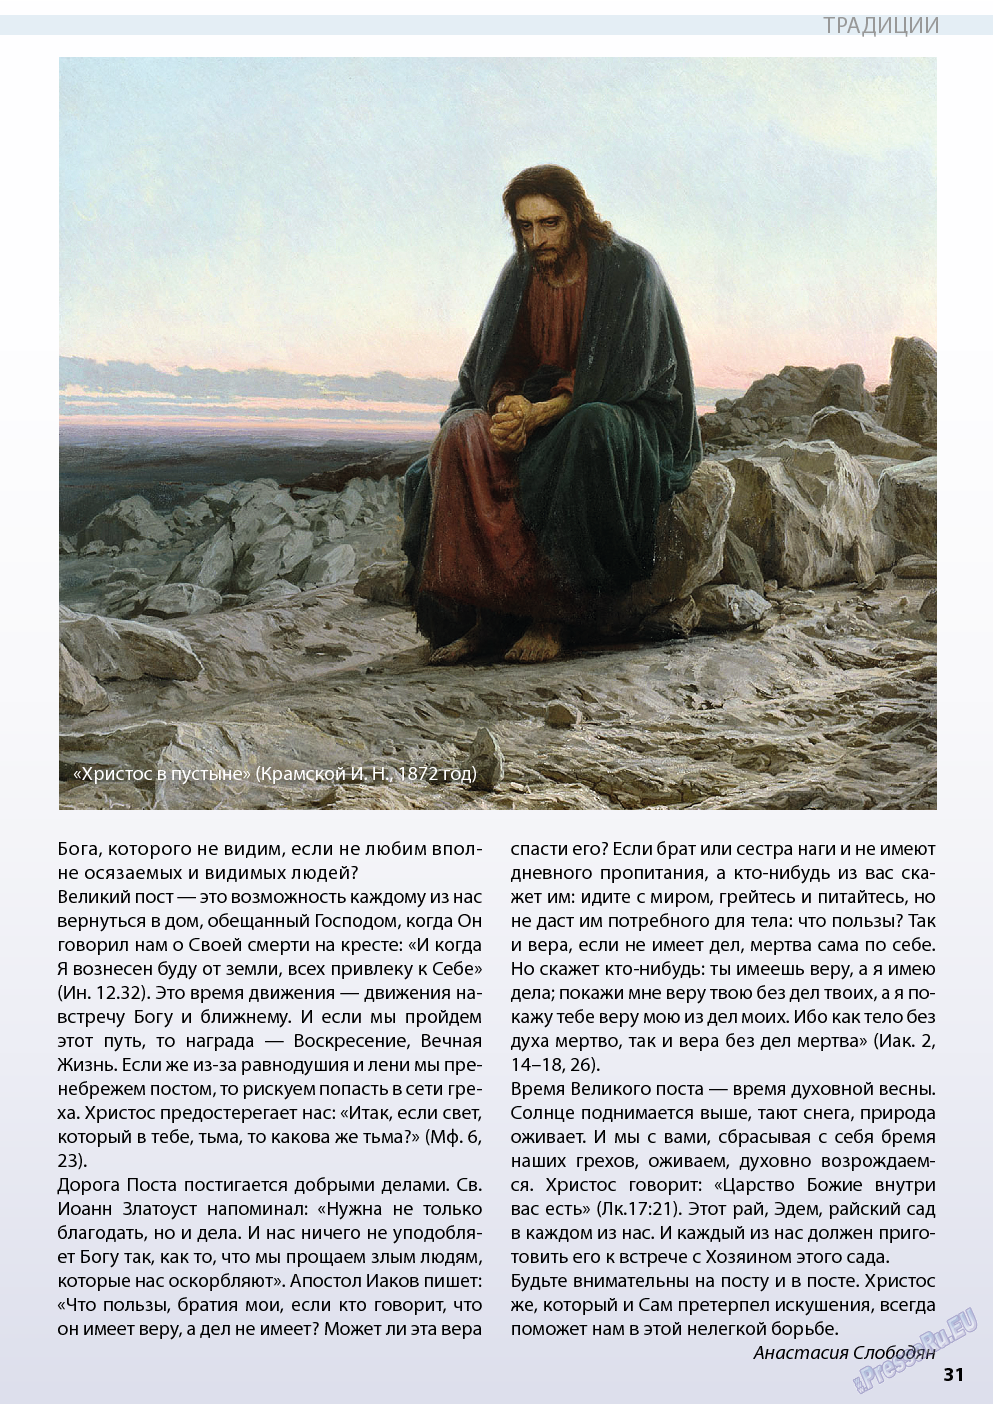 Wadim, журнал. 2014 №3 стр.31